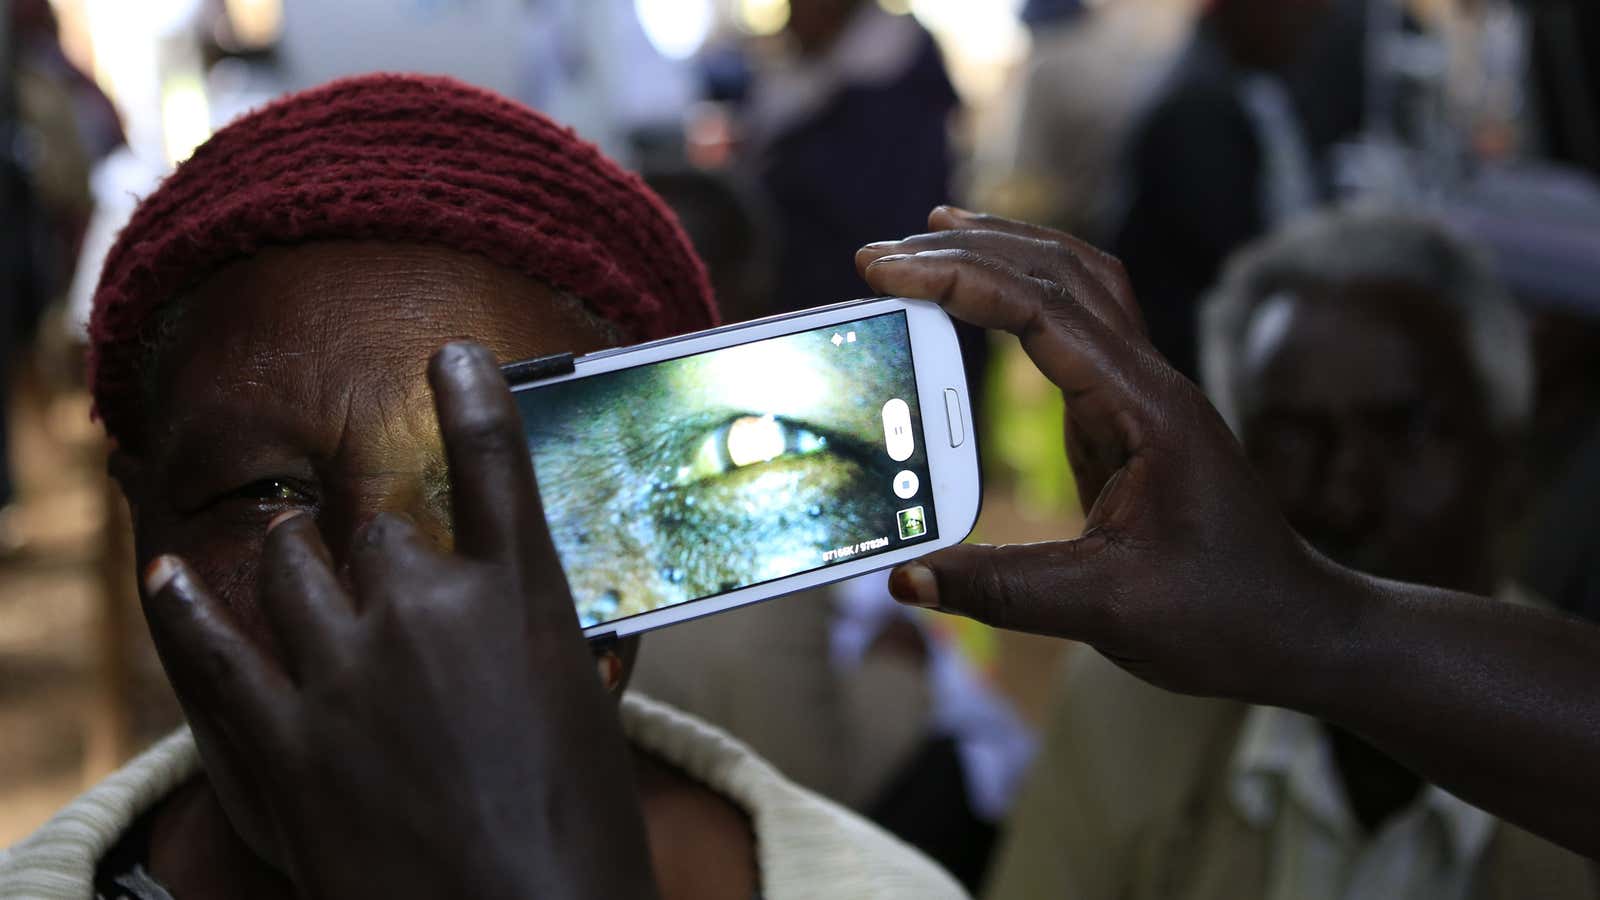 A woman undergoes an eye examination using a smartphone in Kenya